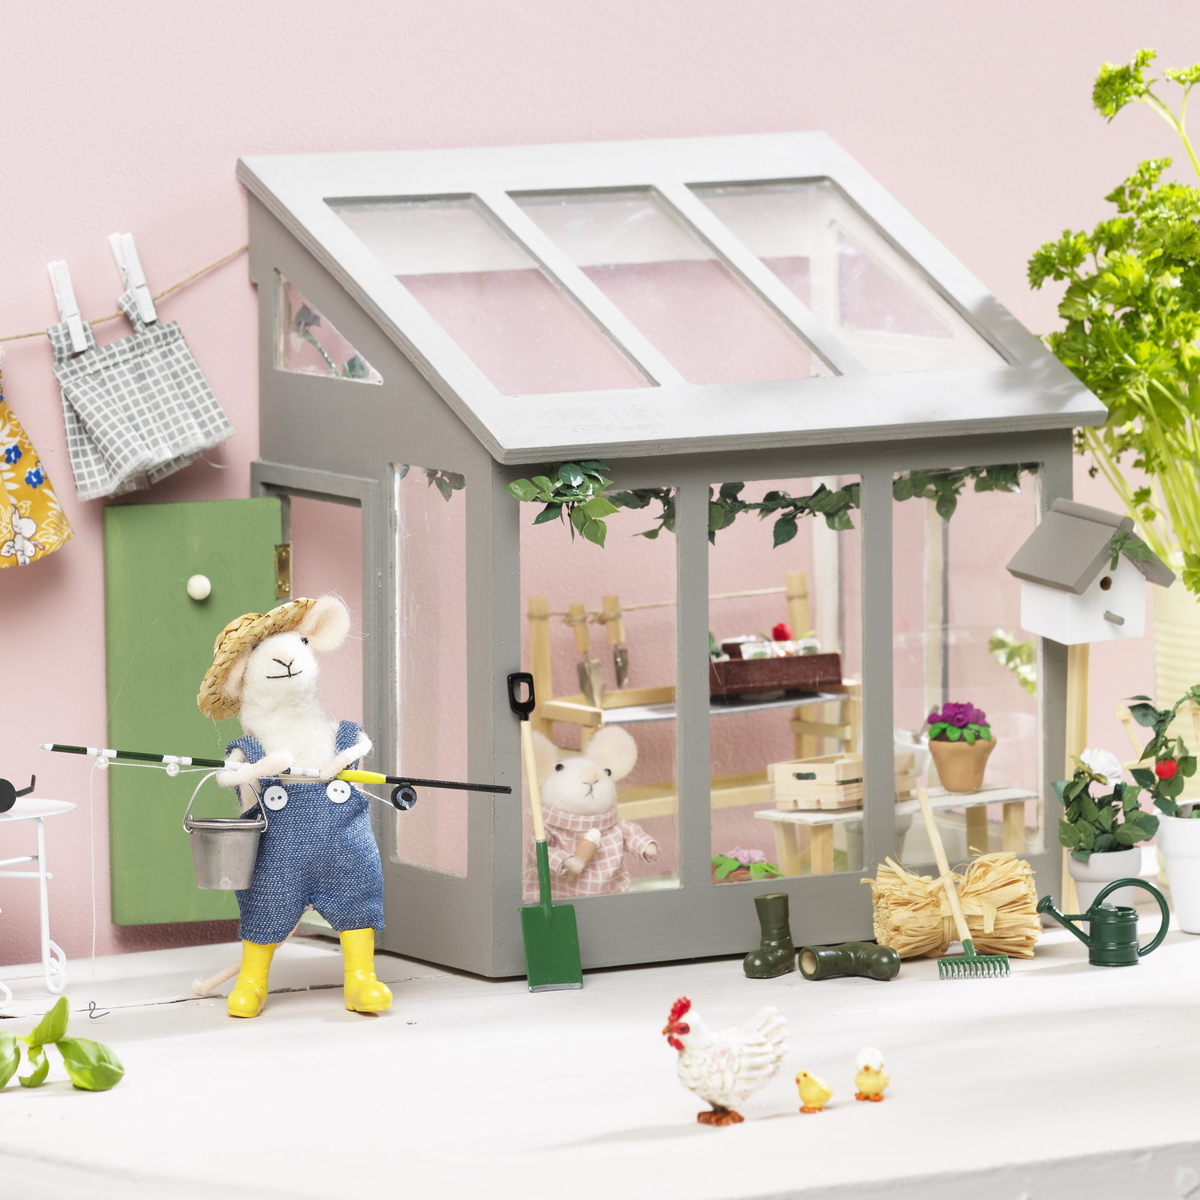 Build a miniature greenhouse